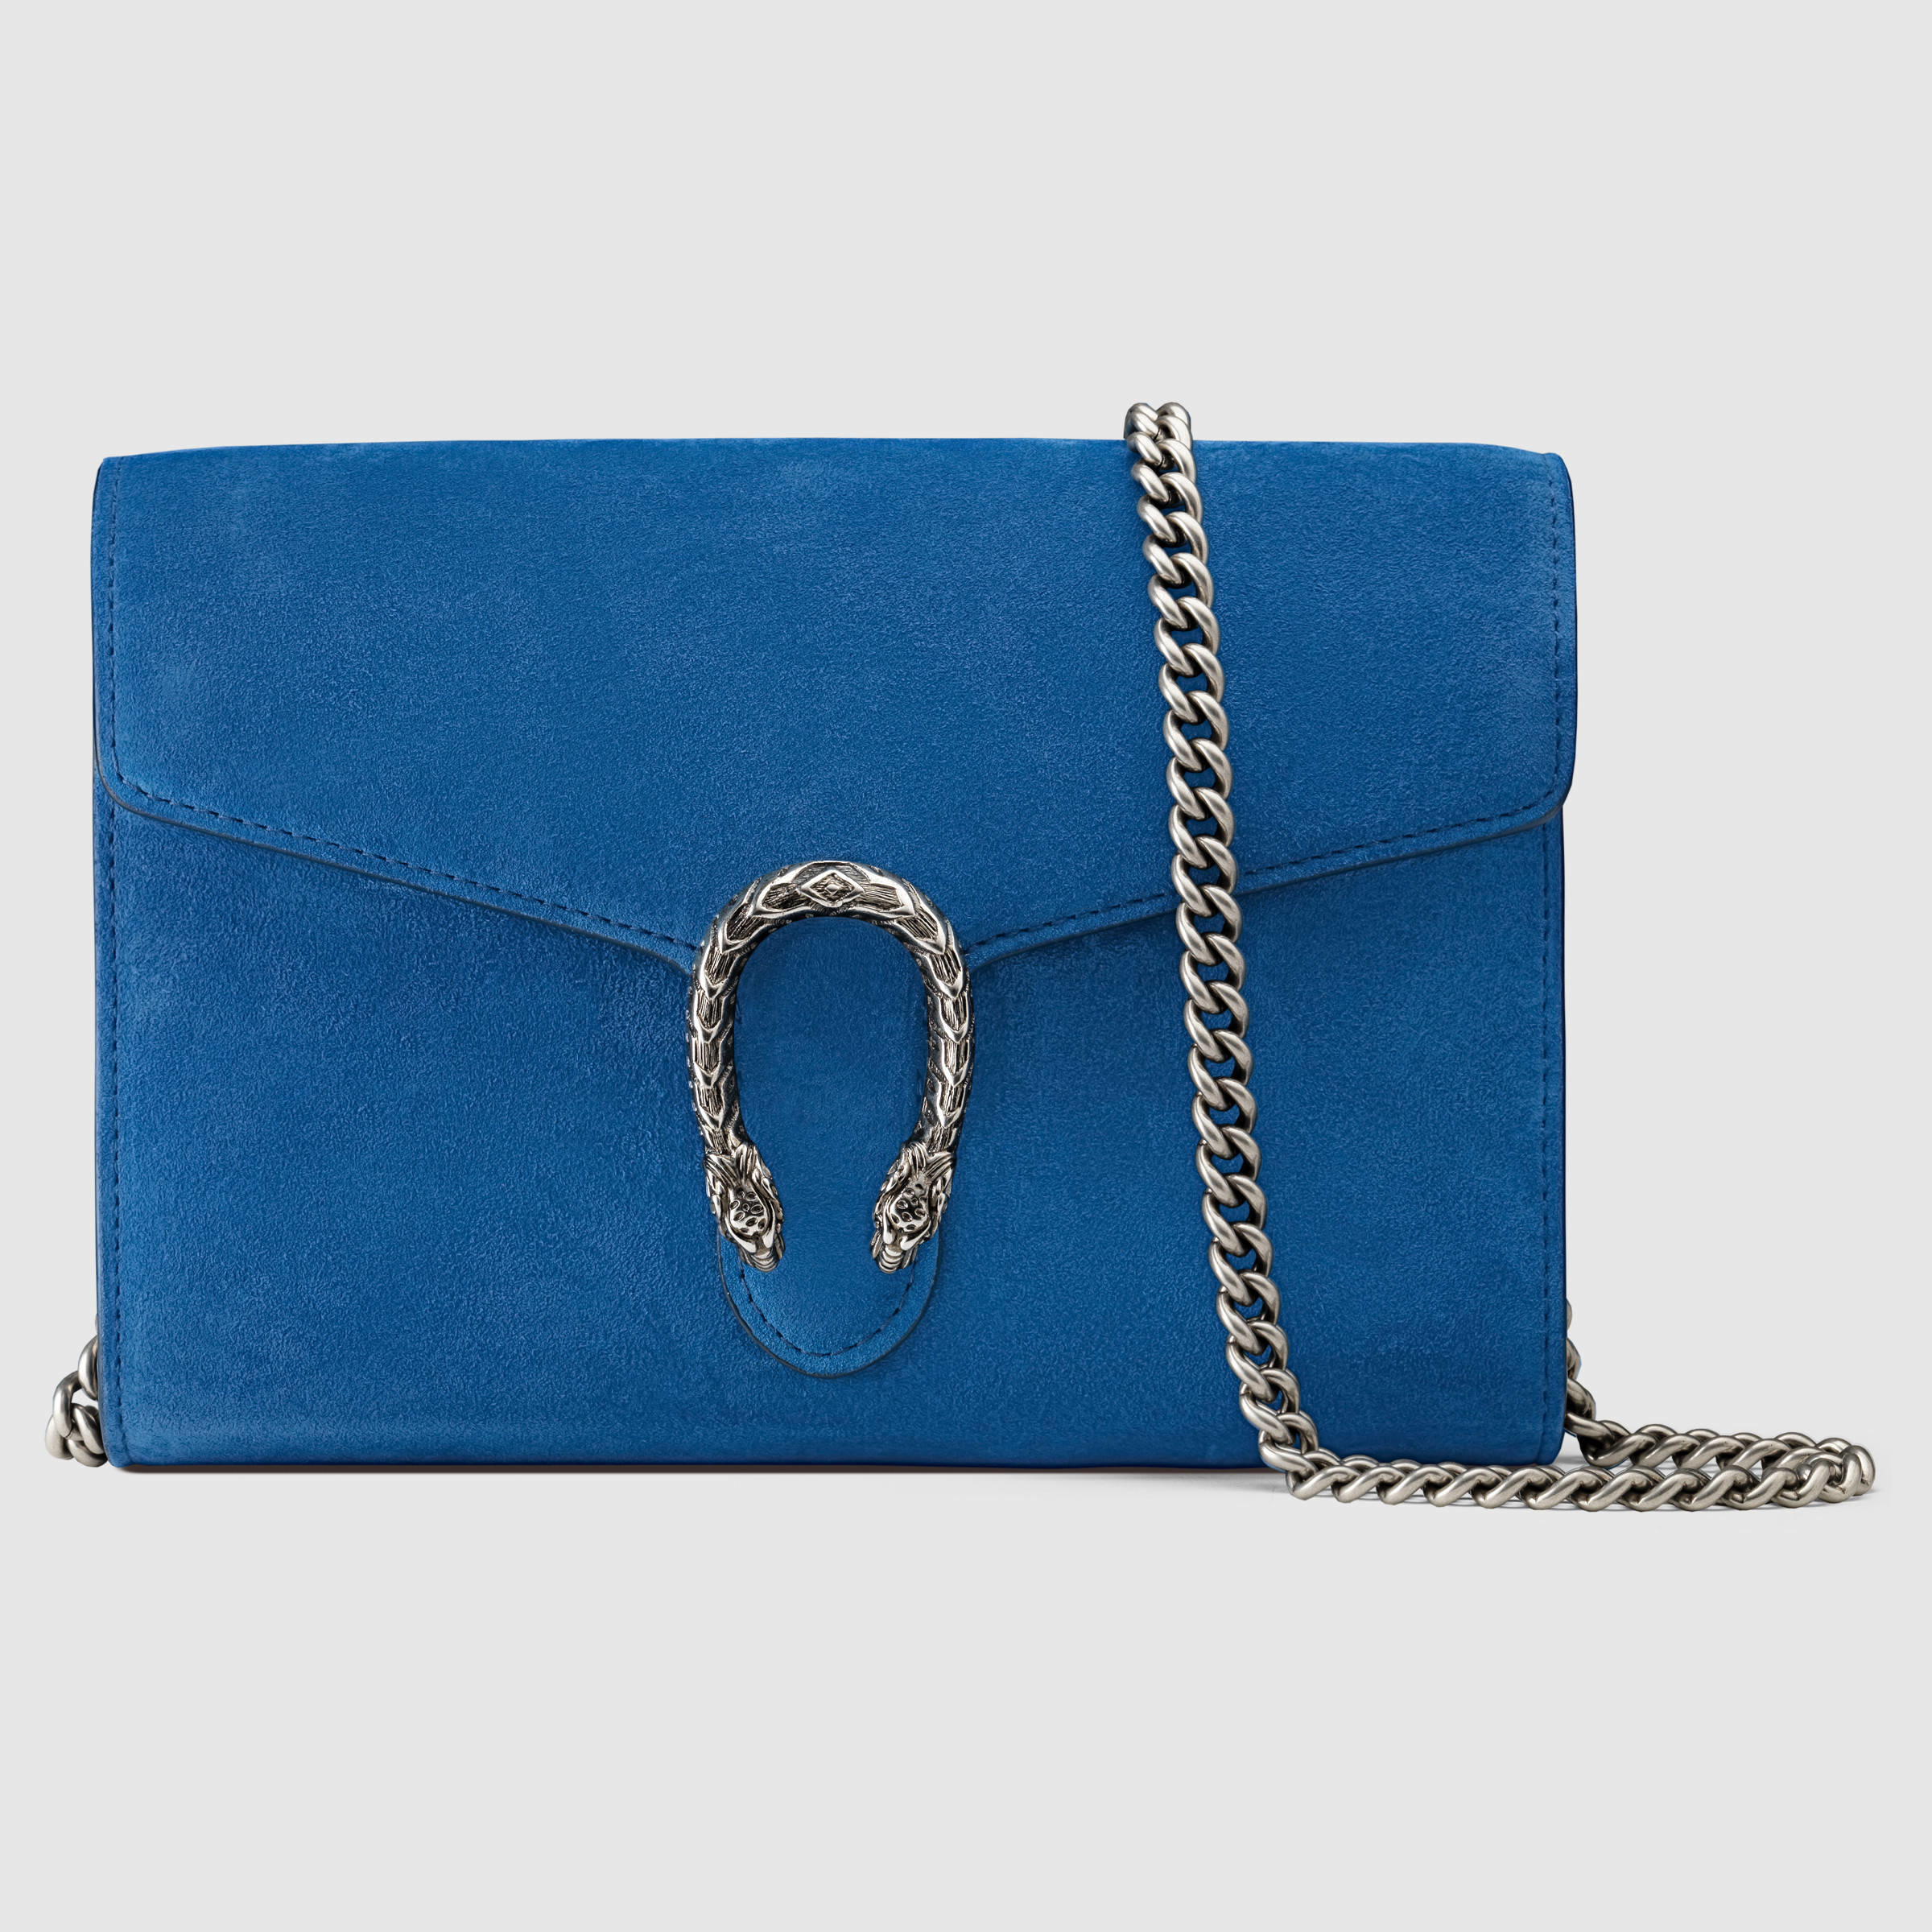 Gucci Dionysus Suede Mini Chain Shoulder Bag in Blue (blue suede) | Lyst